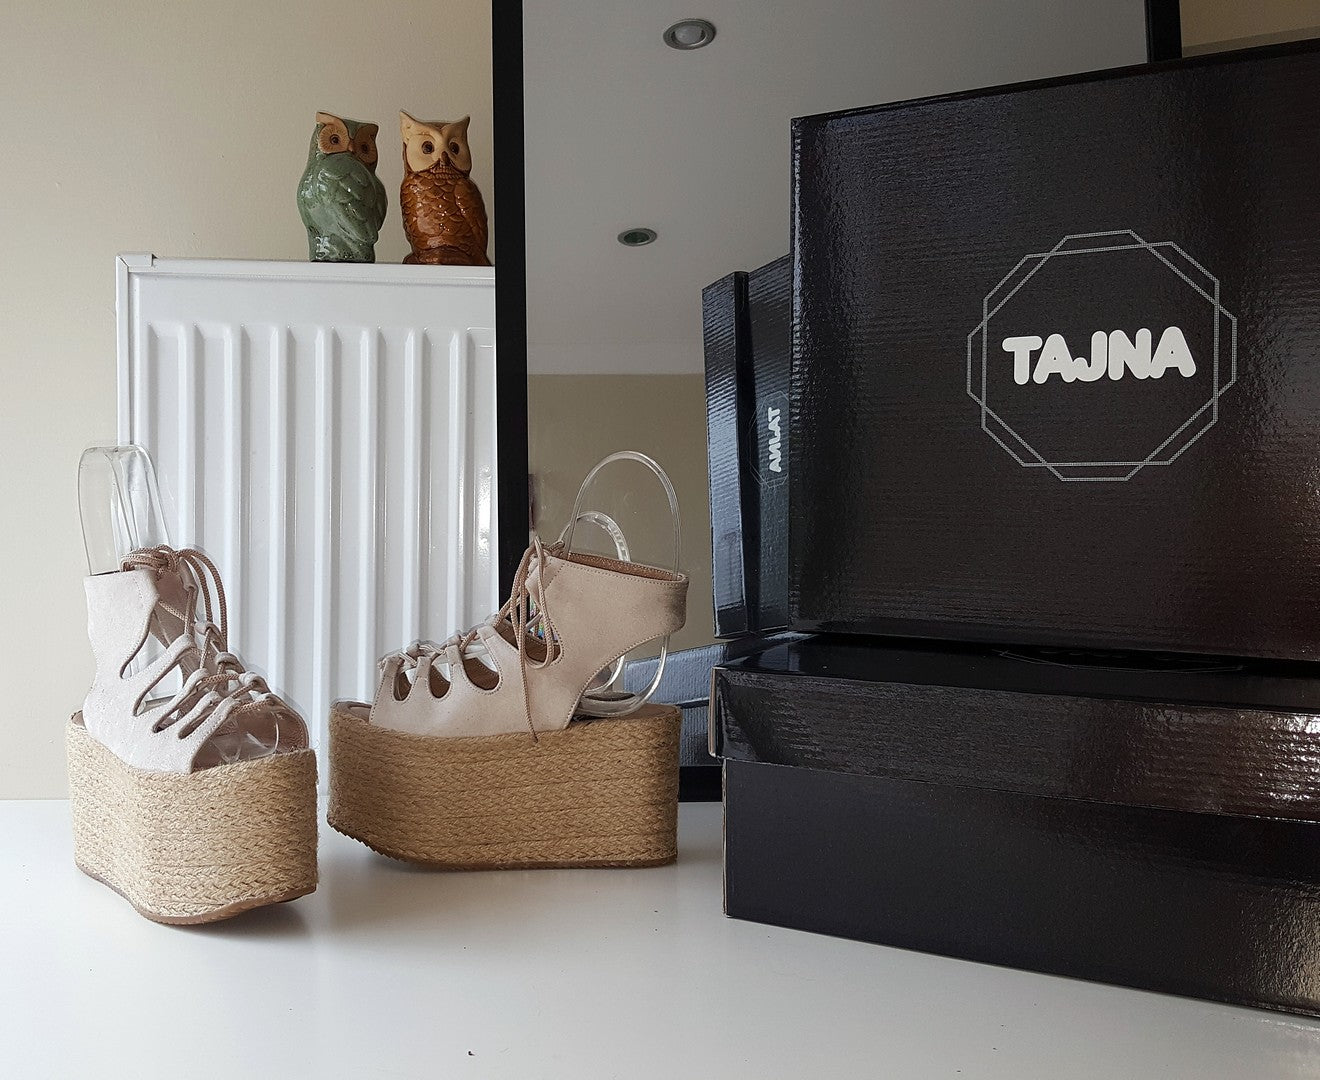 Cream Beige Suede Heel Platform Wedge Sandals - Tajna Club